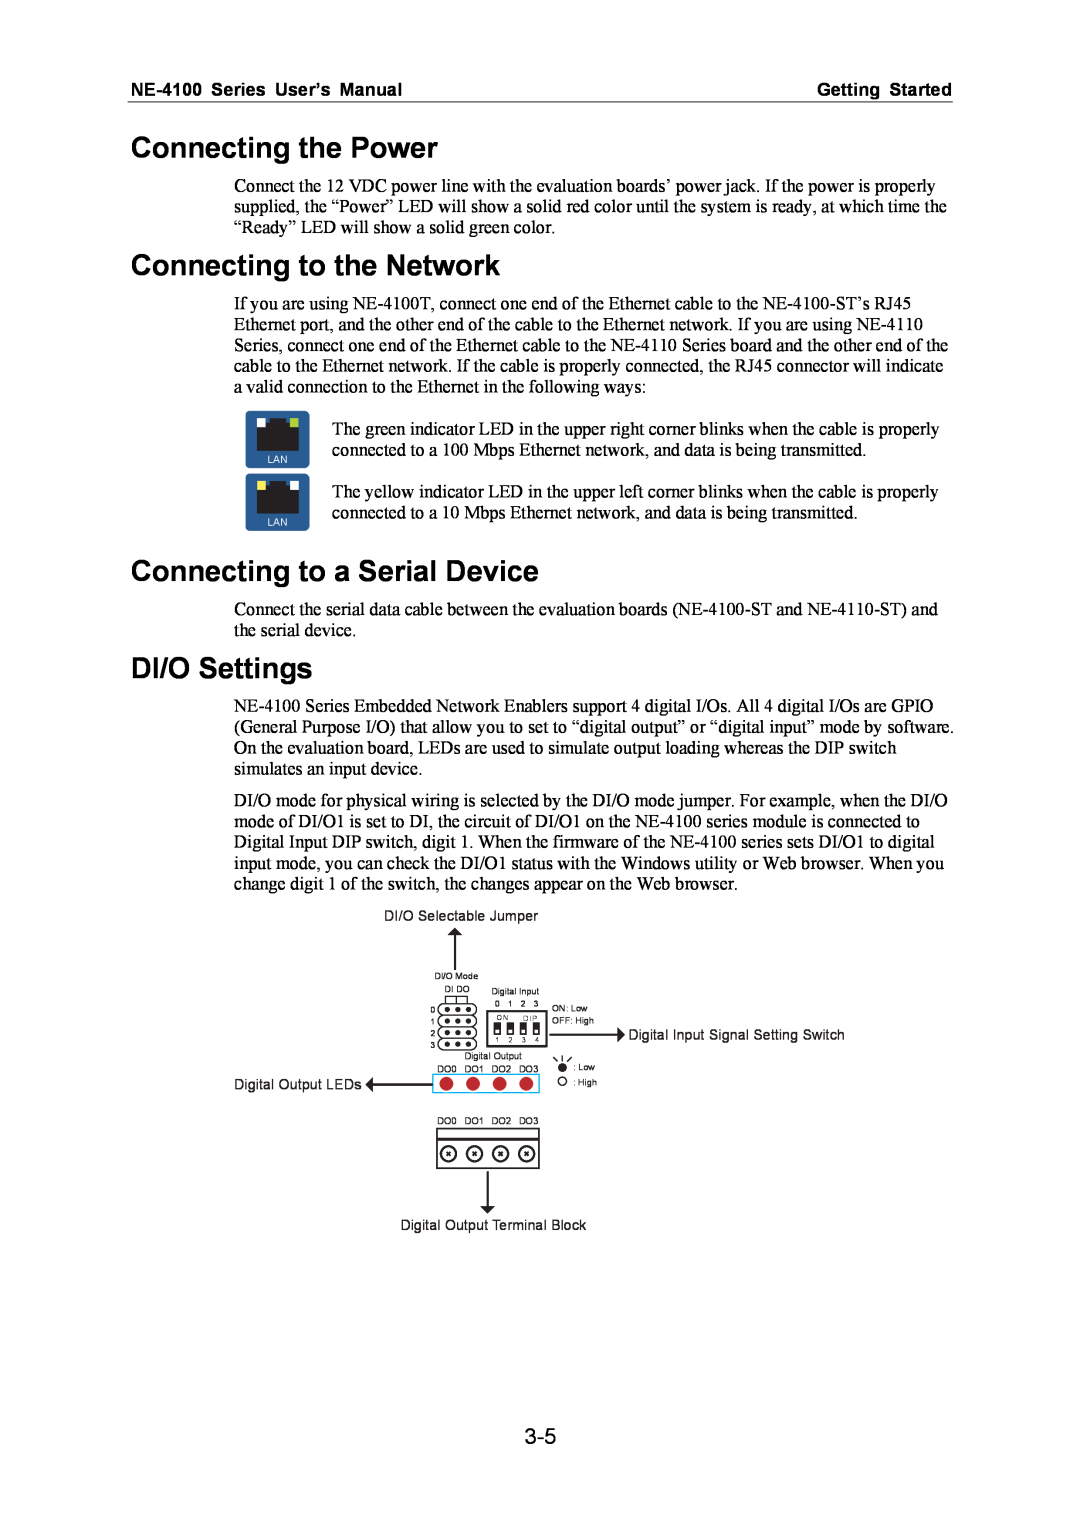 Moxa Technologies NE-4100 Connecting the Power, Connecting to the Network, Connecting to a Serial Device, DI/O Settings 